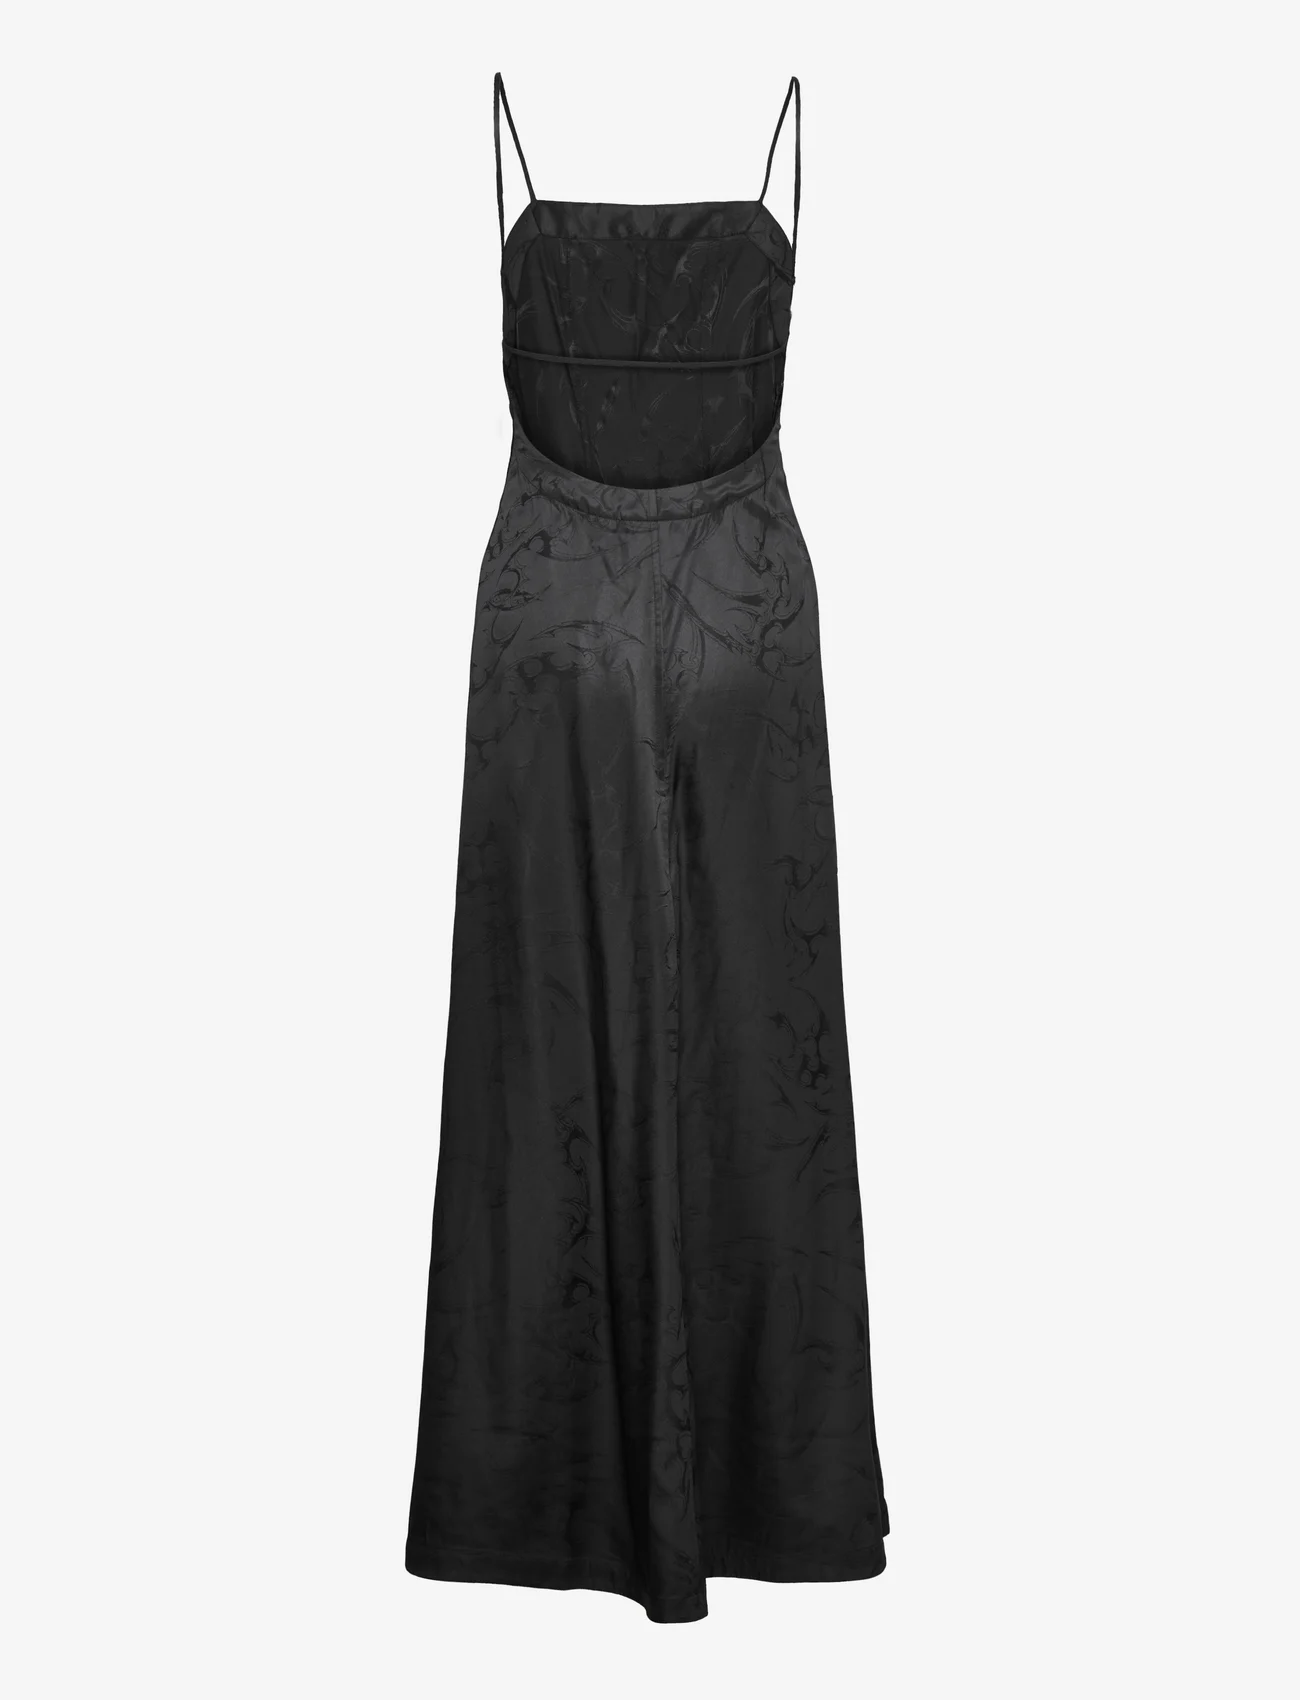 HAN Kjøbenhavn - Jacqaurd  Maxi Strap Dress - feestelijke kleding voor outlet-prijzen - black - 1